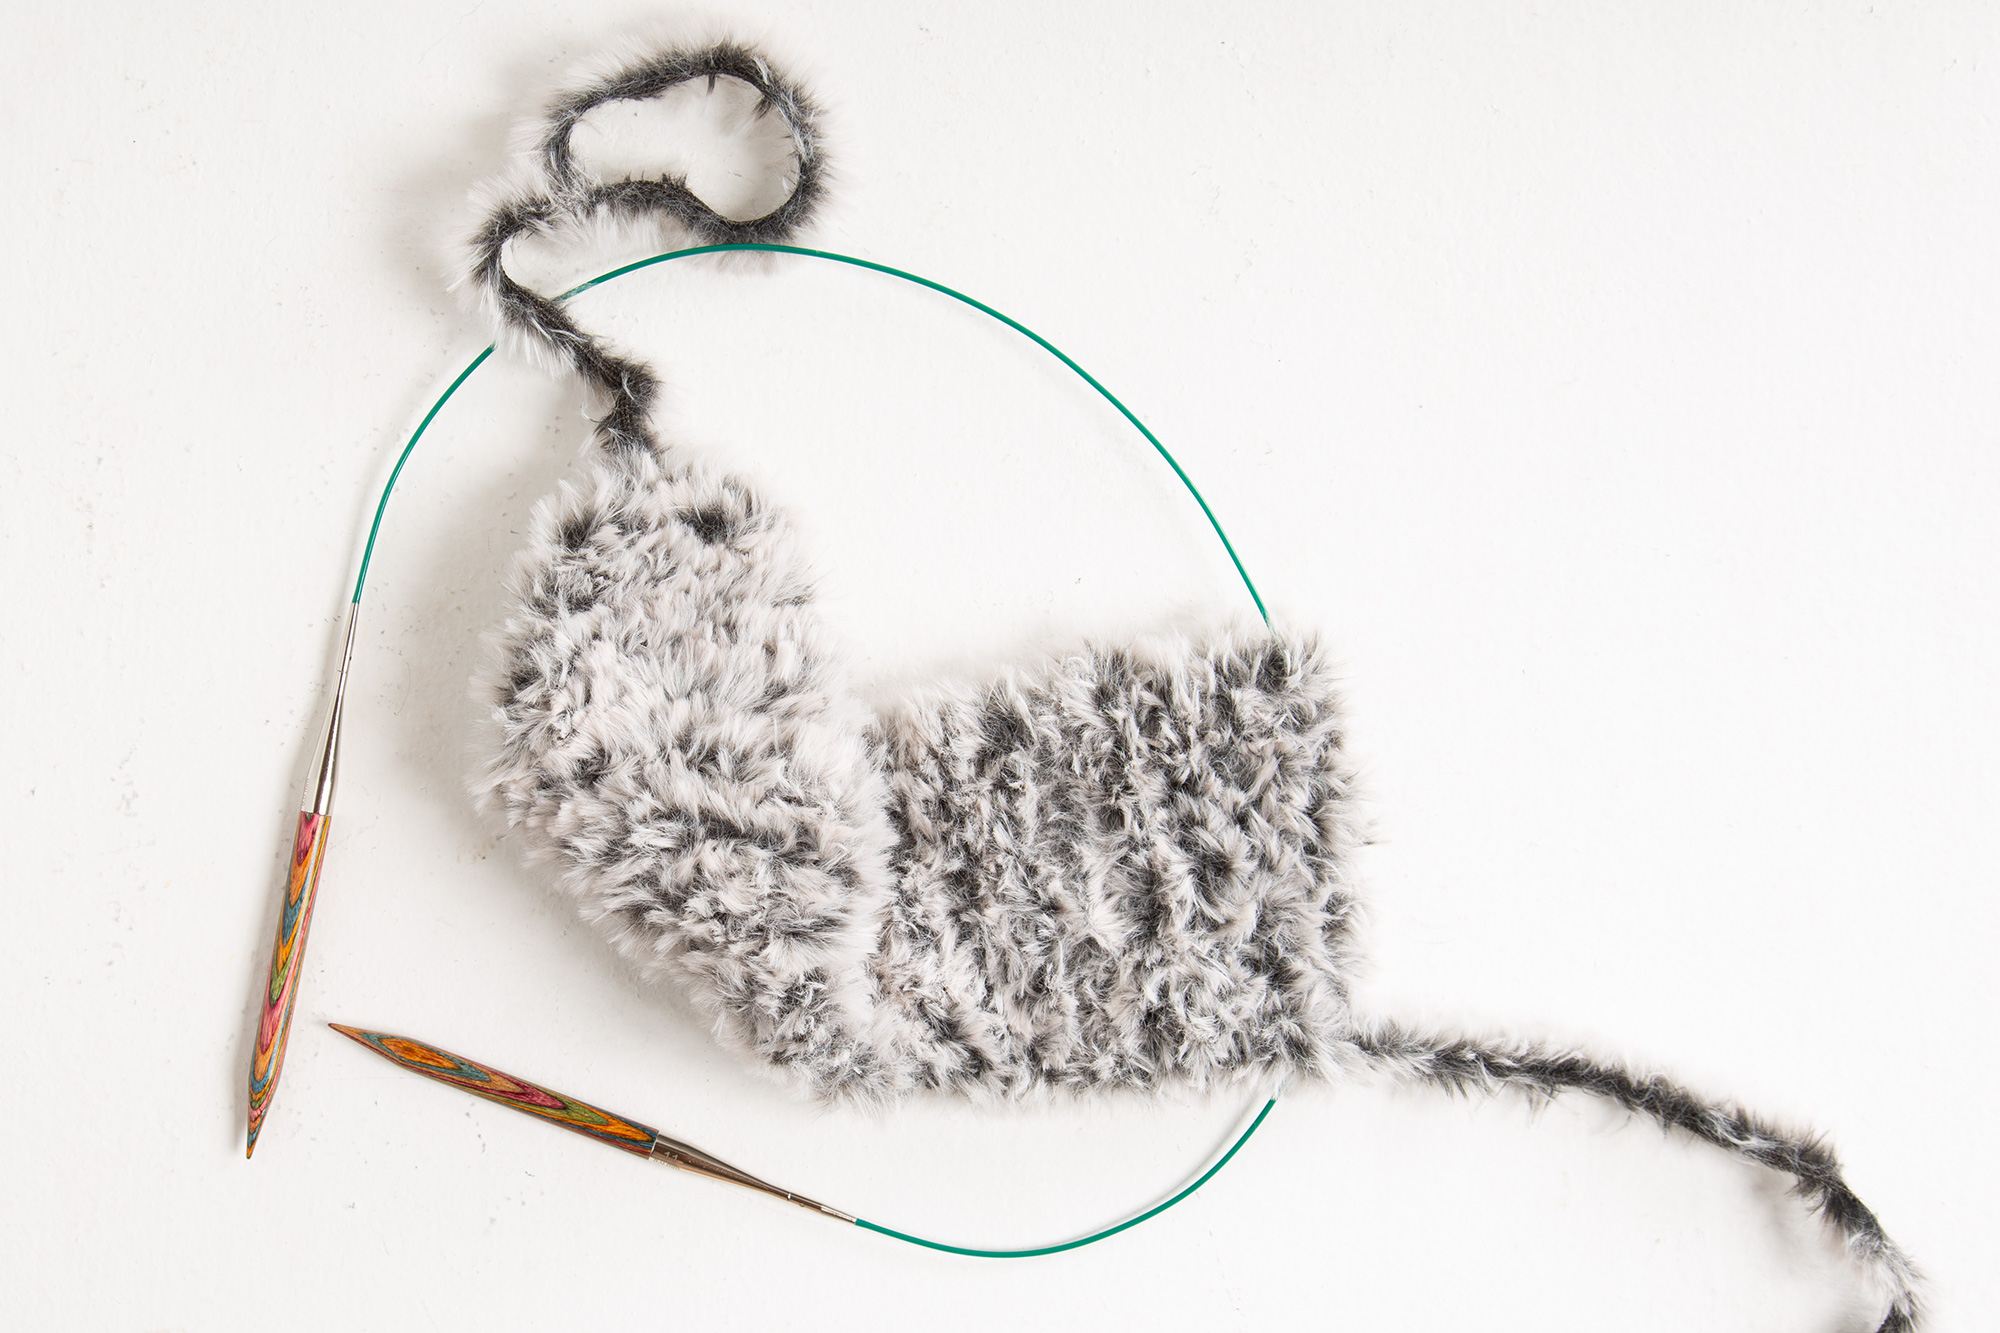 fur wool for knitting